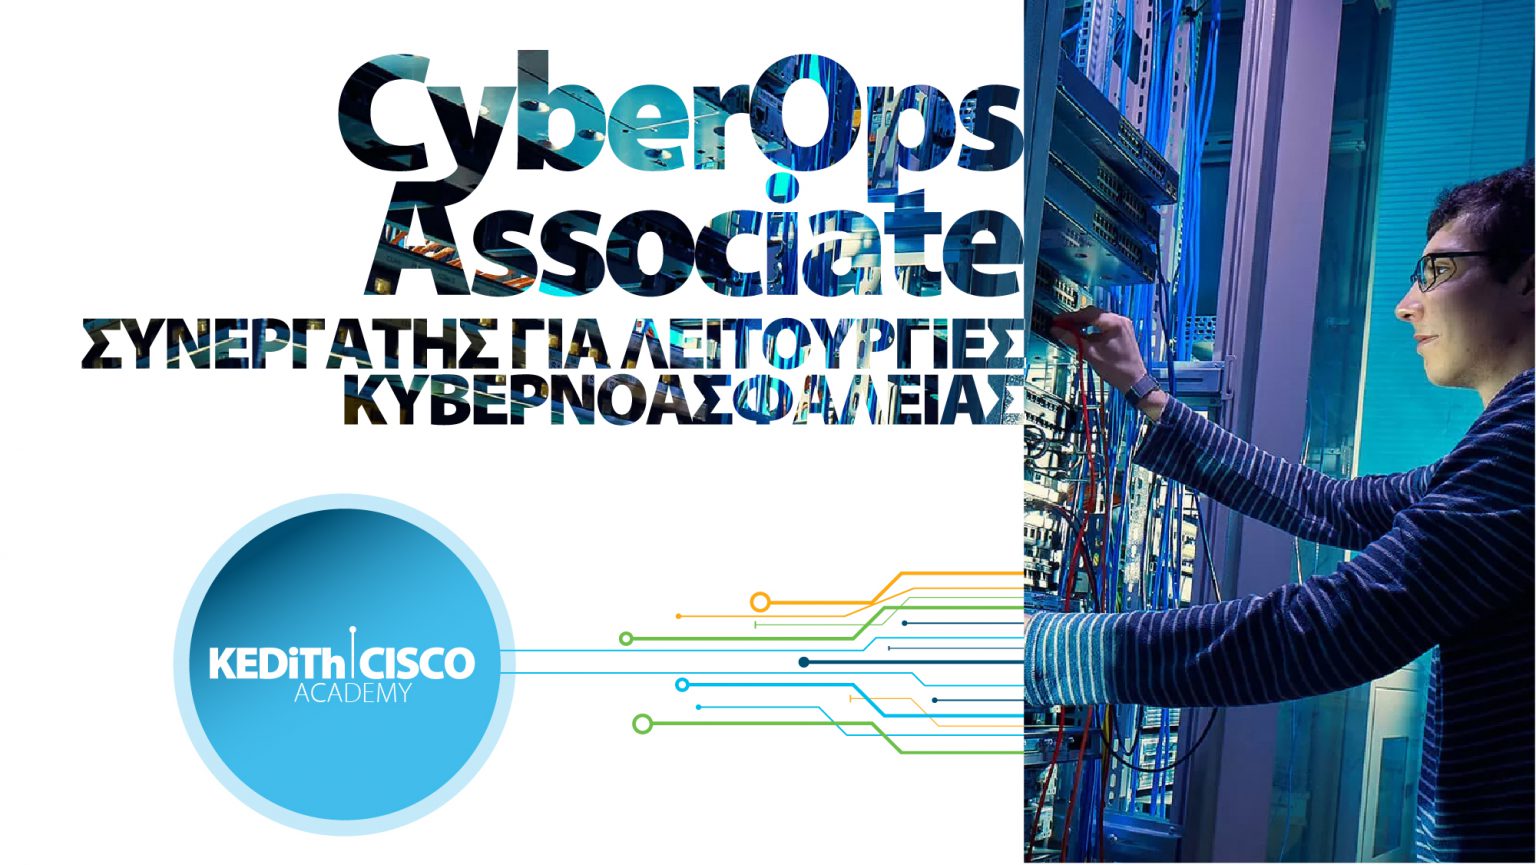 cisco-cyber-security